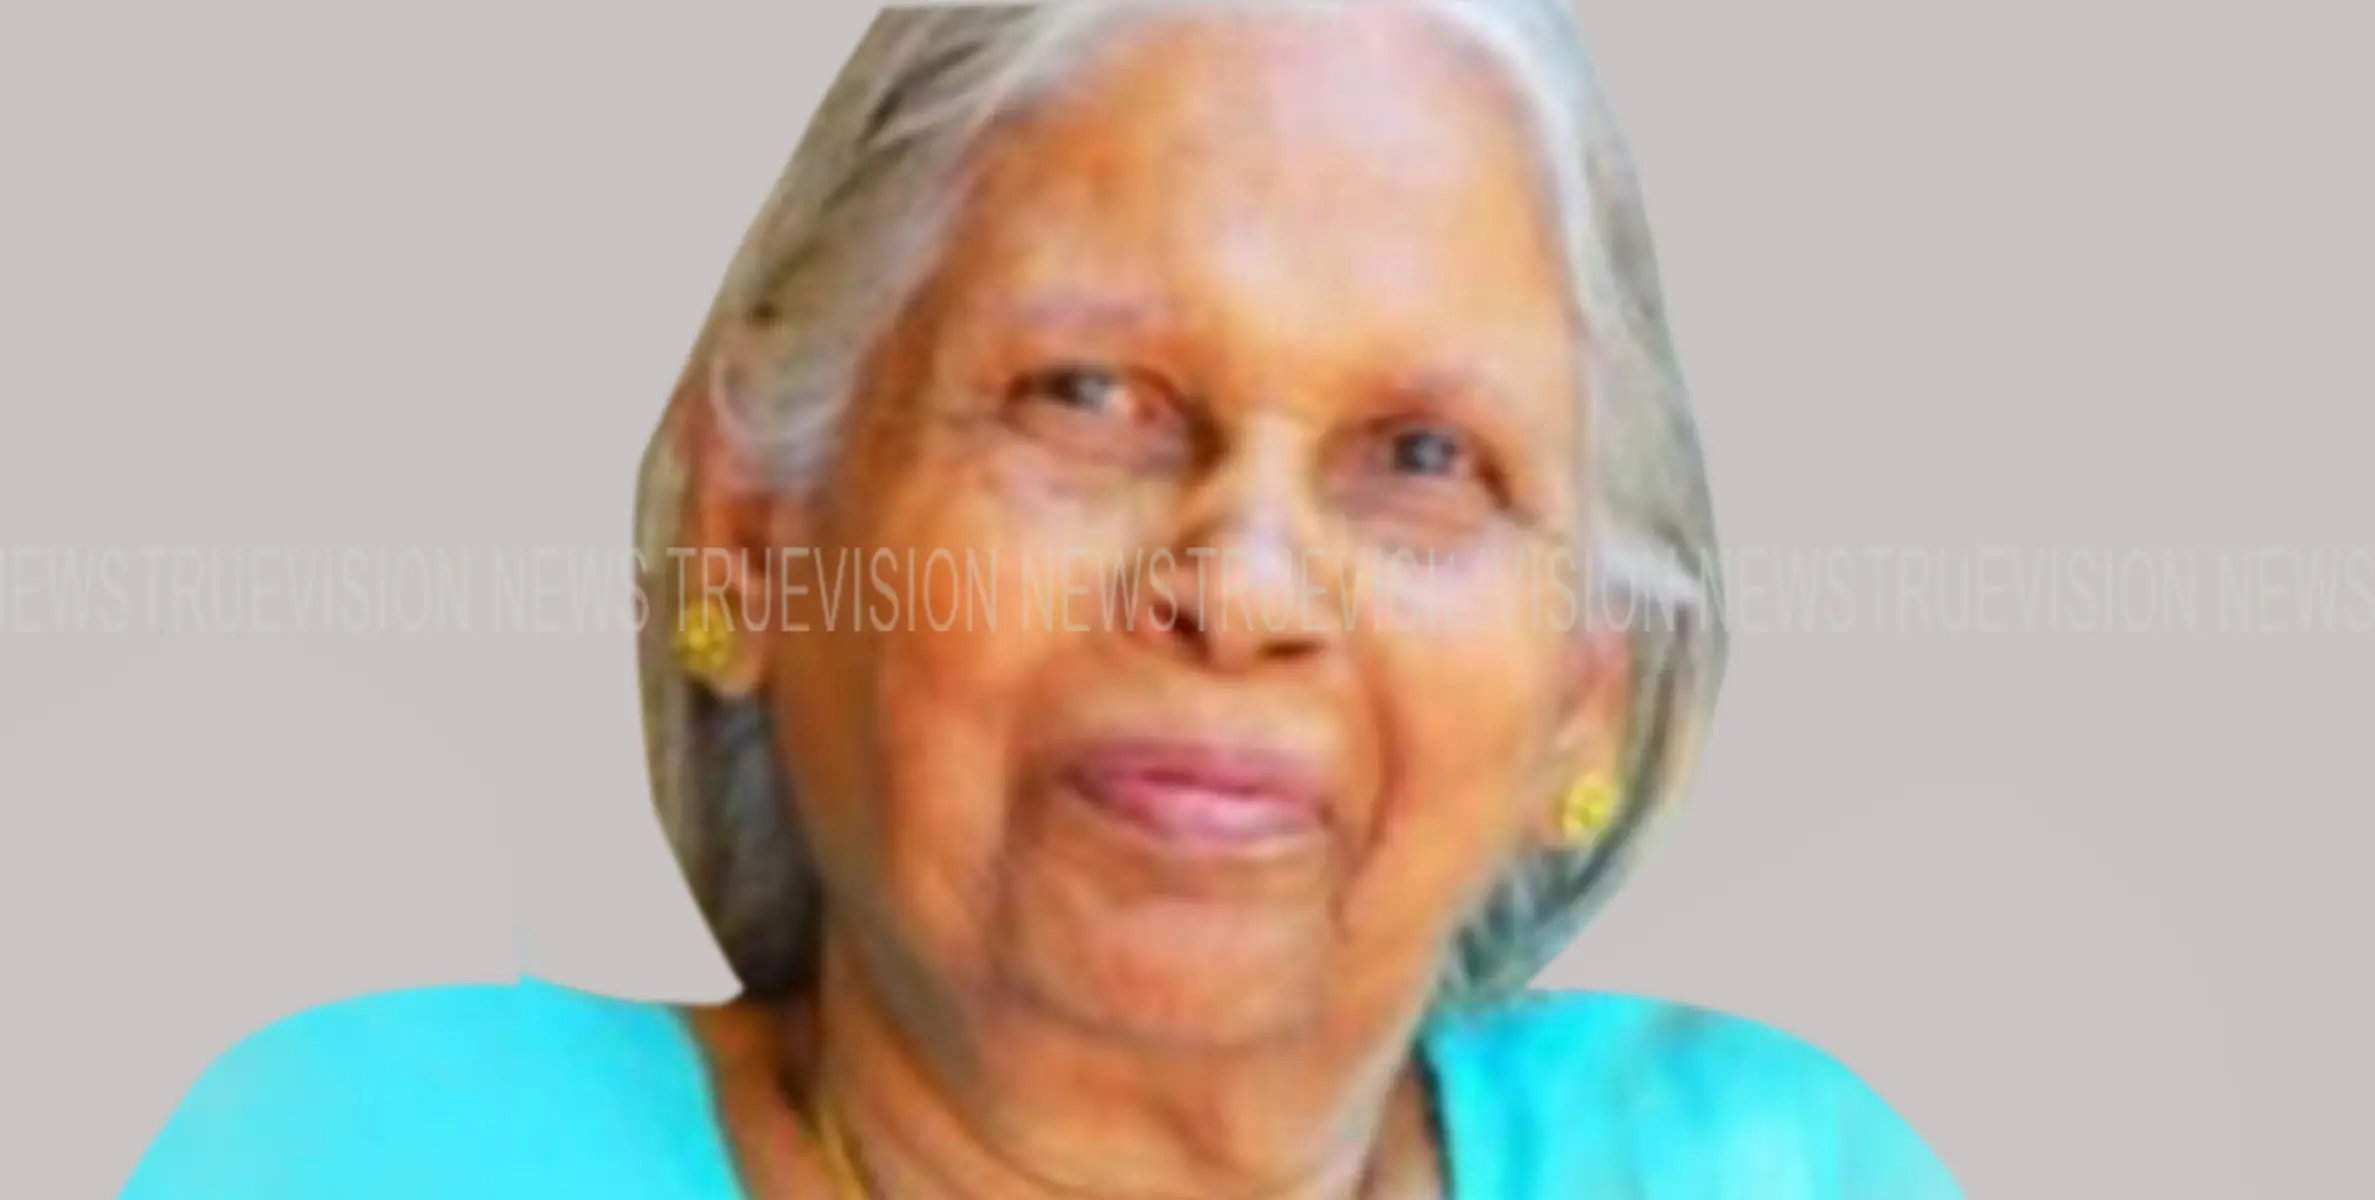 #obituary | ഉള്ളിയേരി രാരോത്ത് ഇന്ദ്രാണി അമ്മ അന്തരിച്ചു